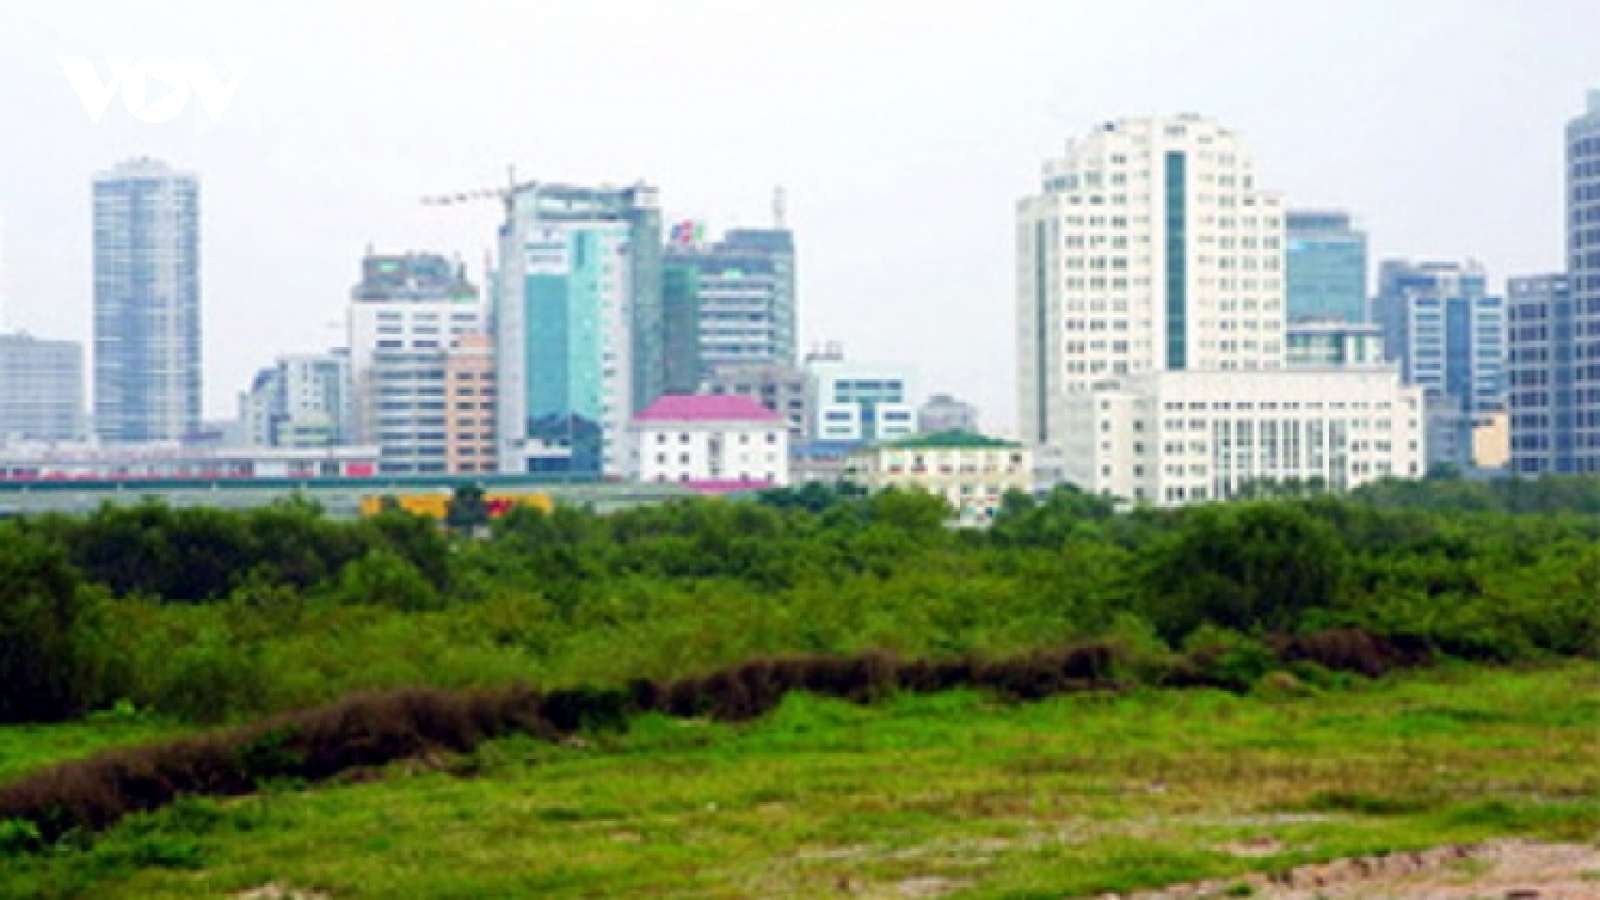 WB highlights comprehensive Vietnamese policy framework in land management